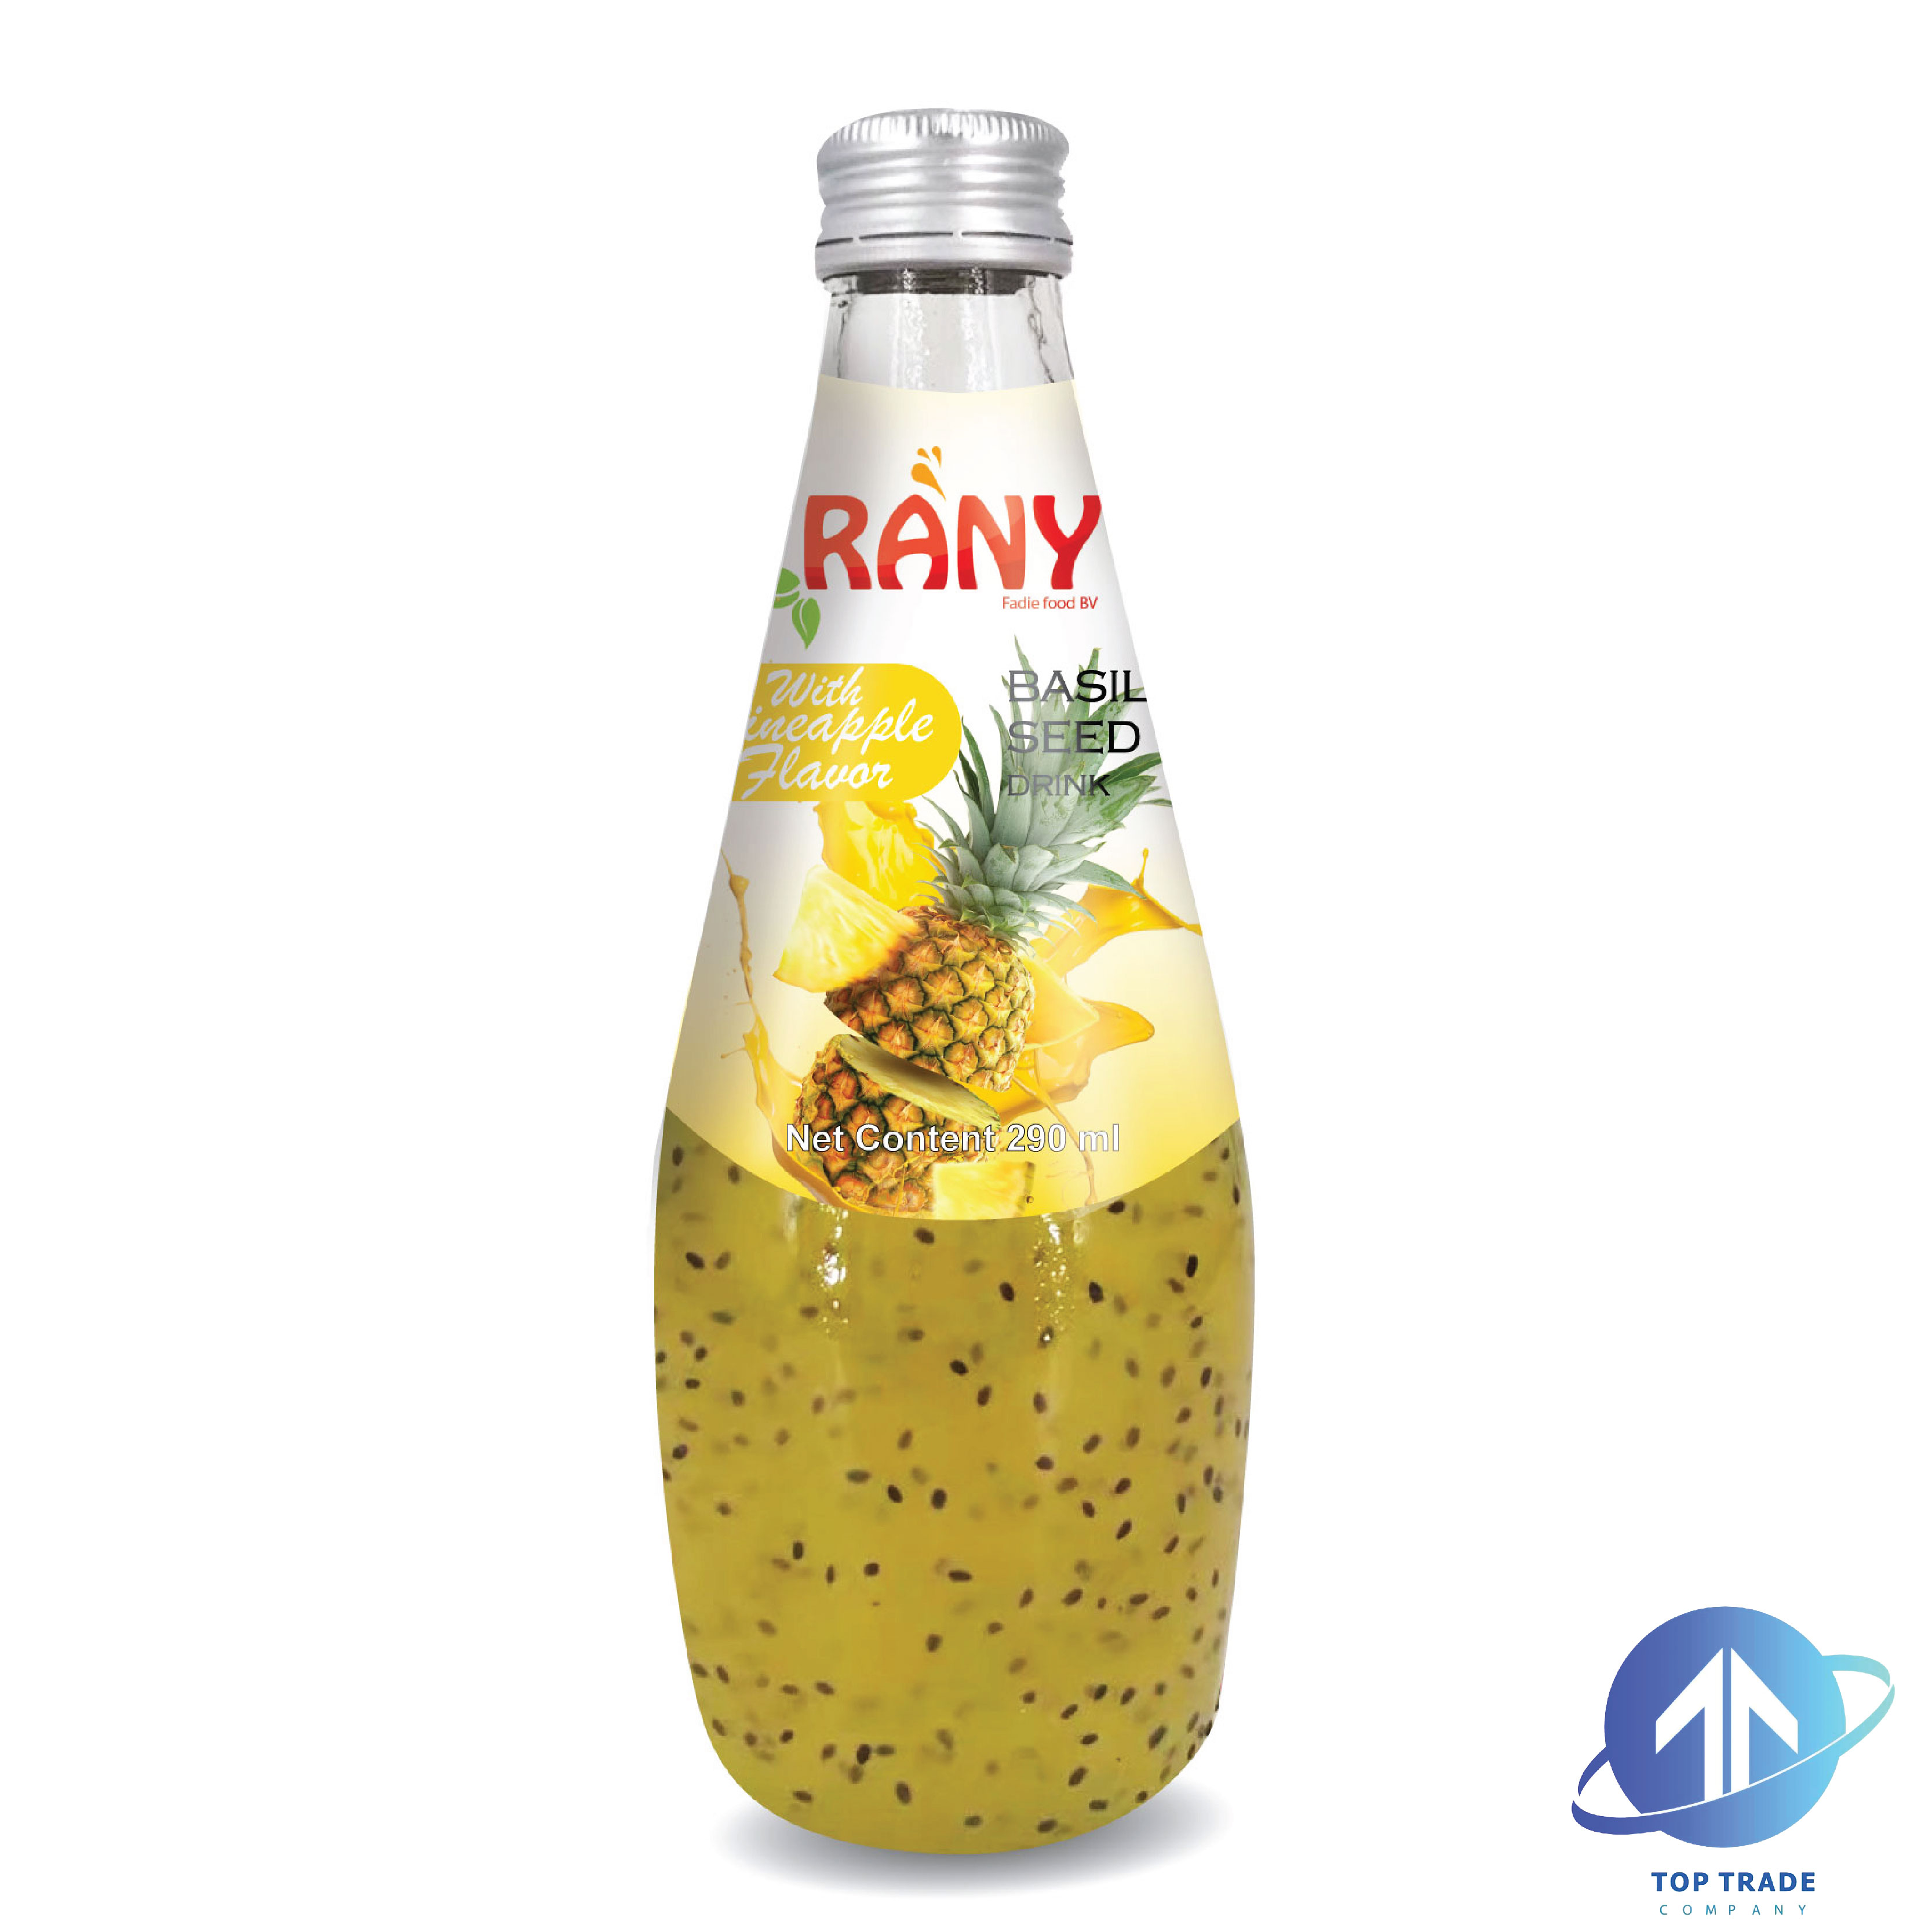 RANY Pinapple basil seed drink 290ML